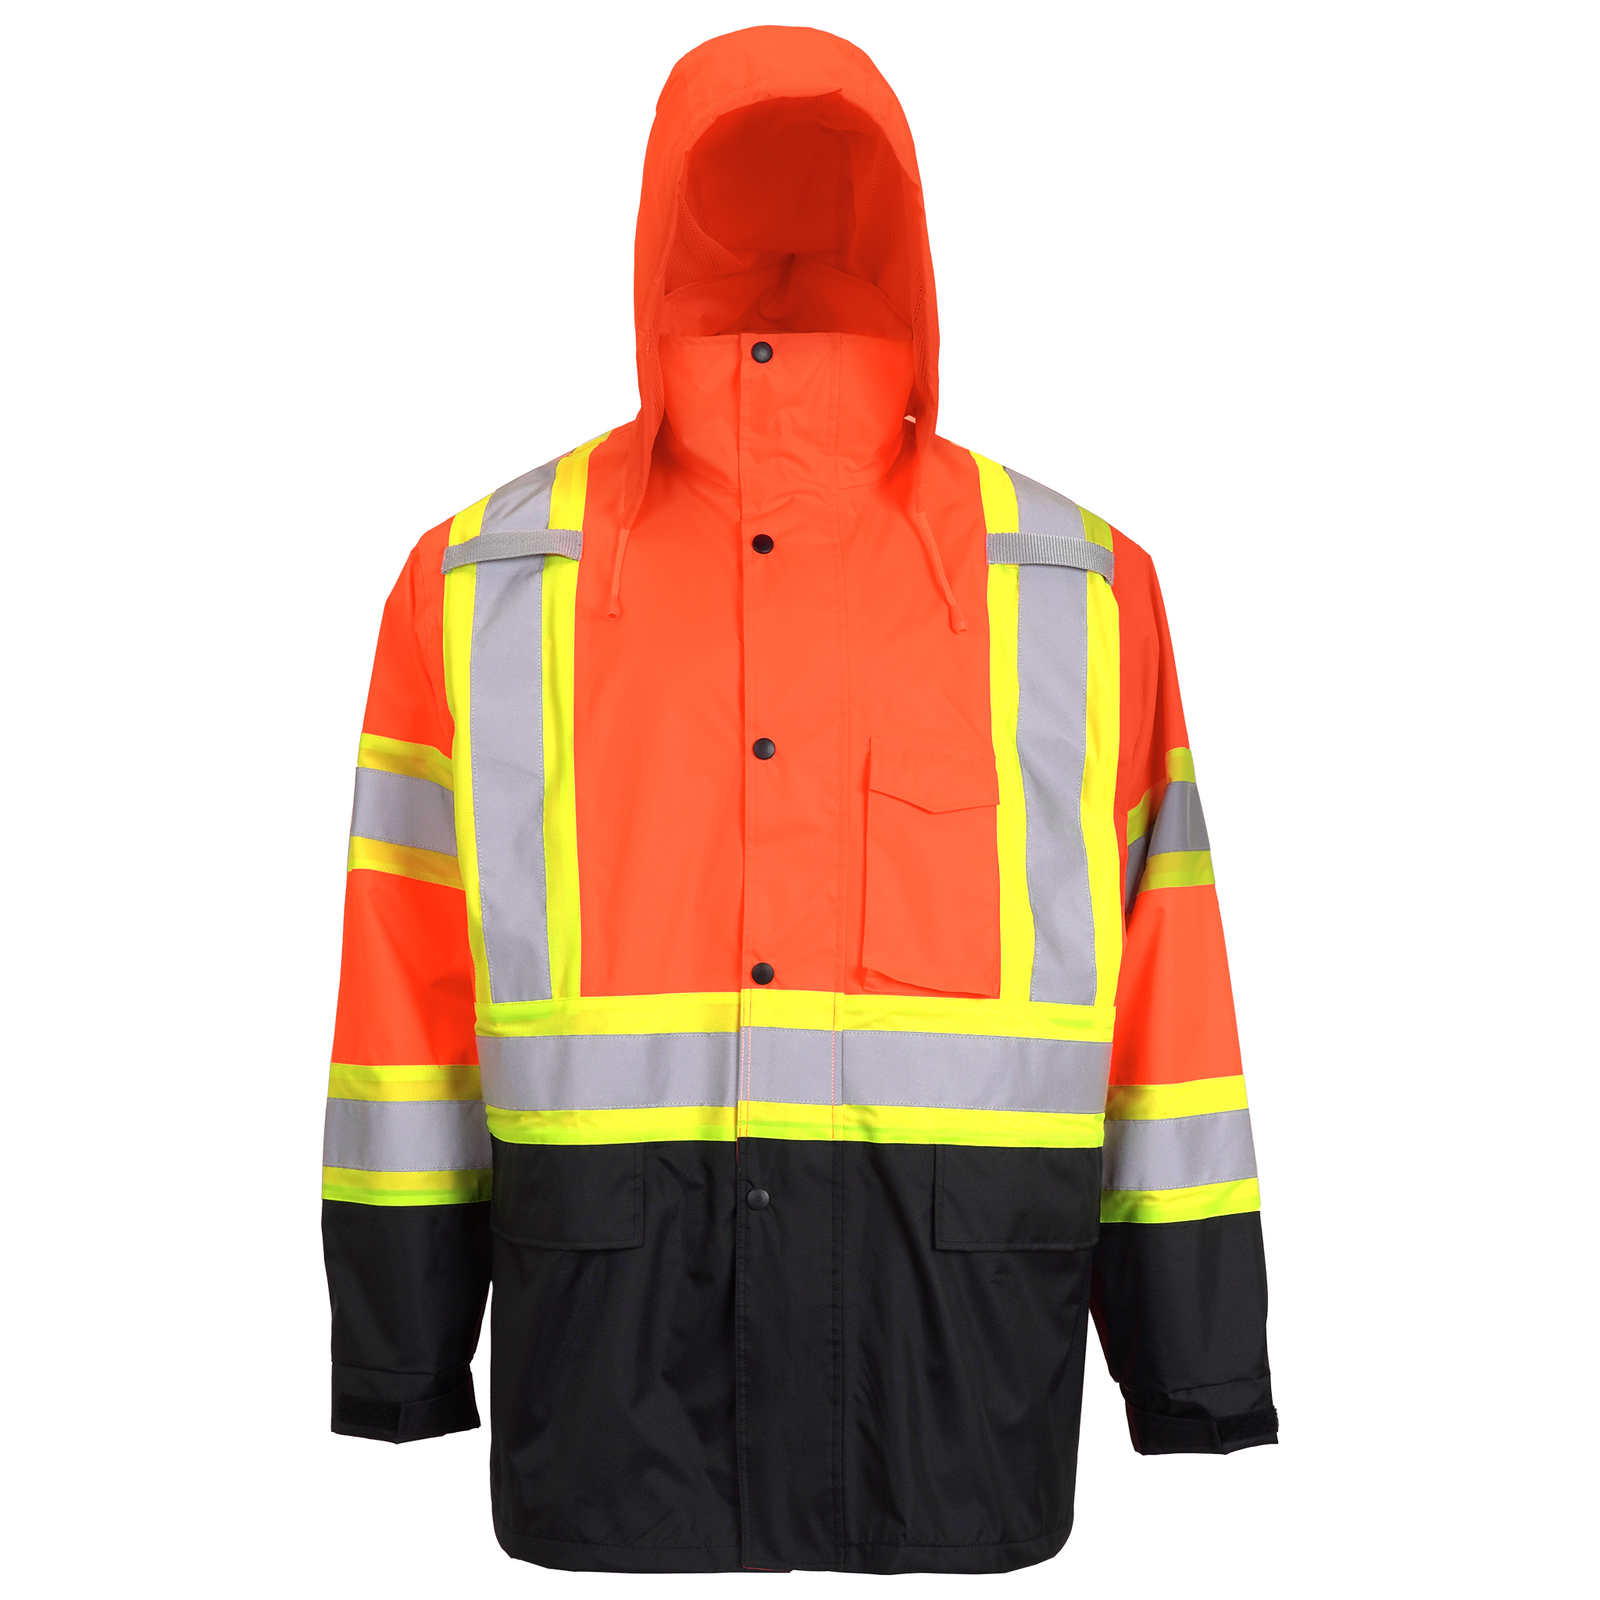 Waterproof ANSI compliant safety jacket